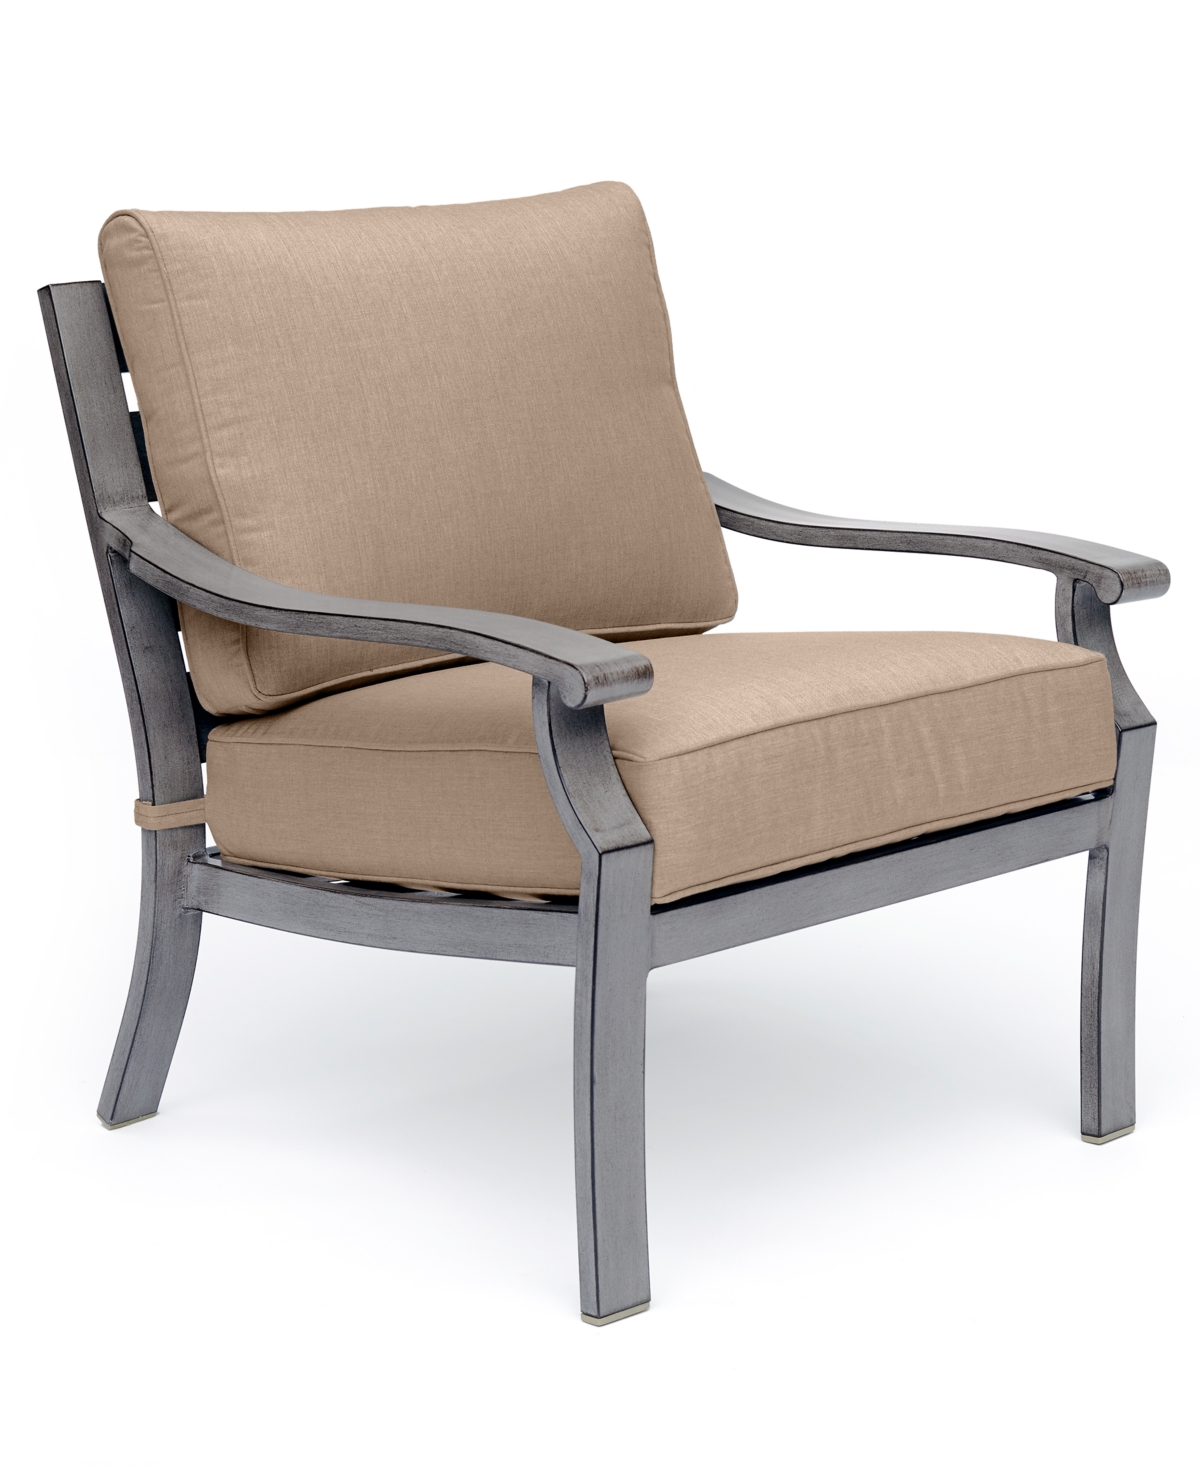 Agio Tara Aluminum Outdoor Club Chair, Created For Macy's In Outdura Remy Pebble